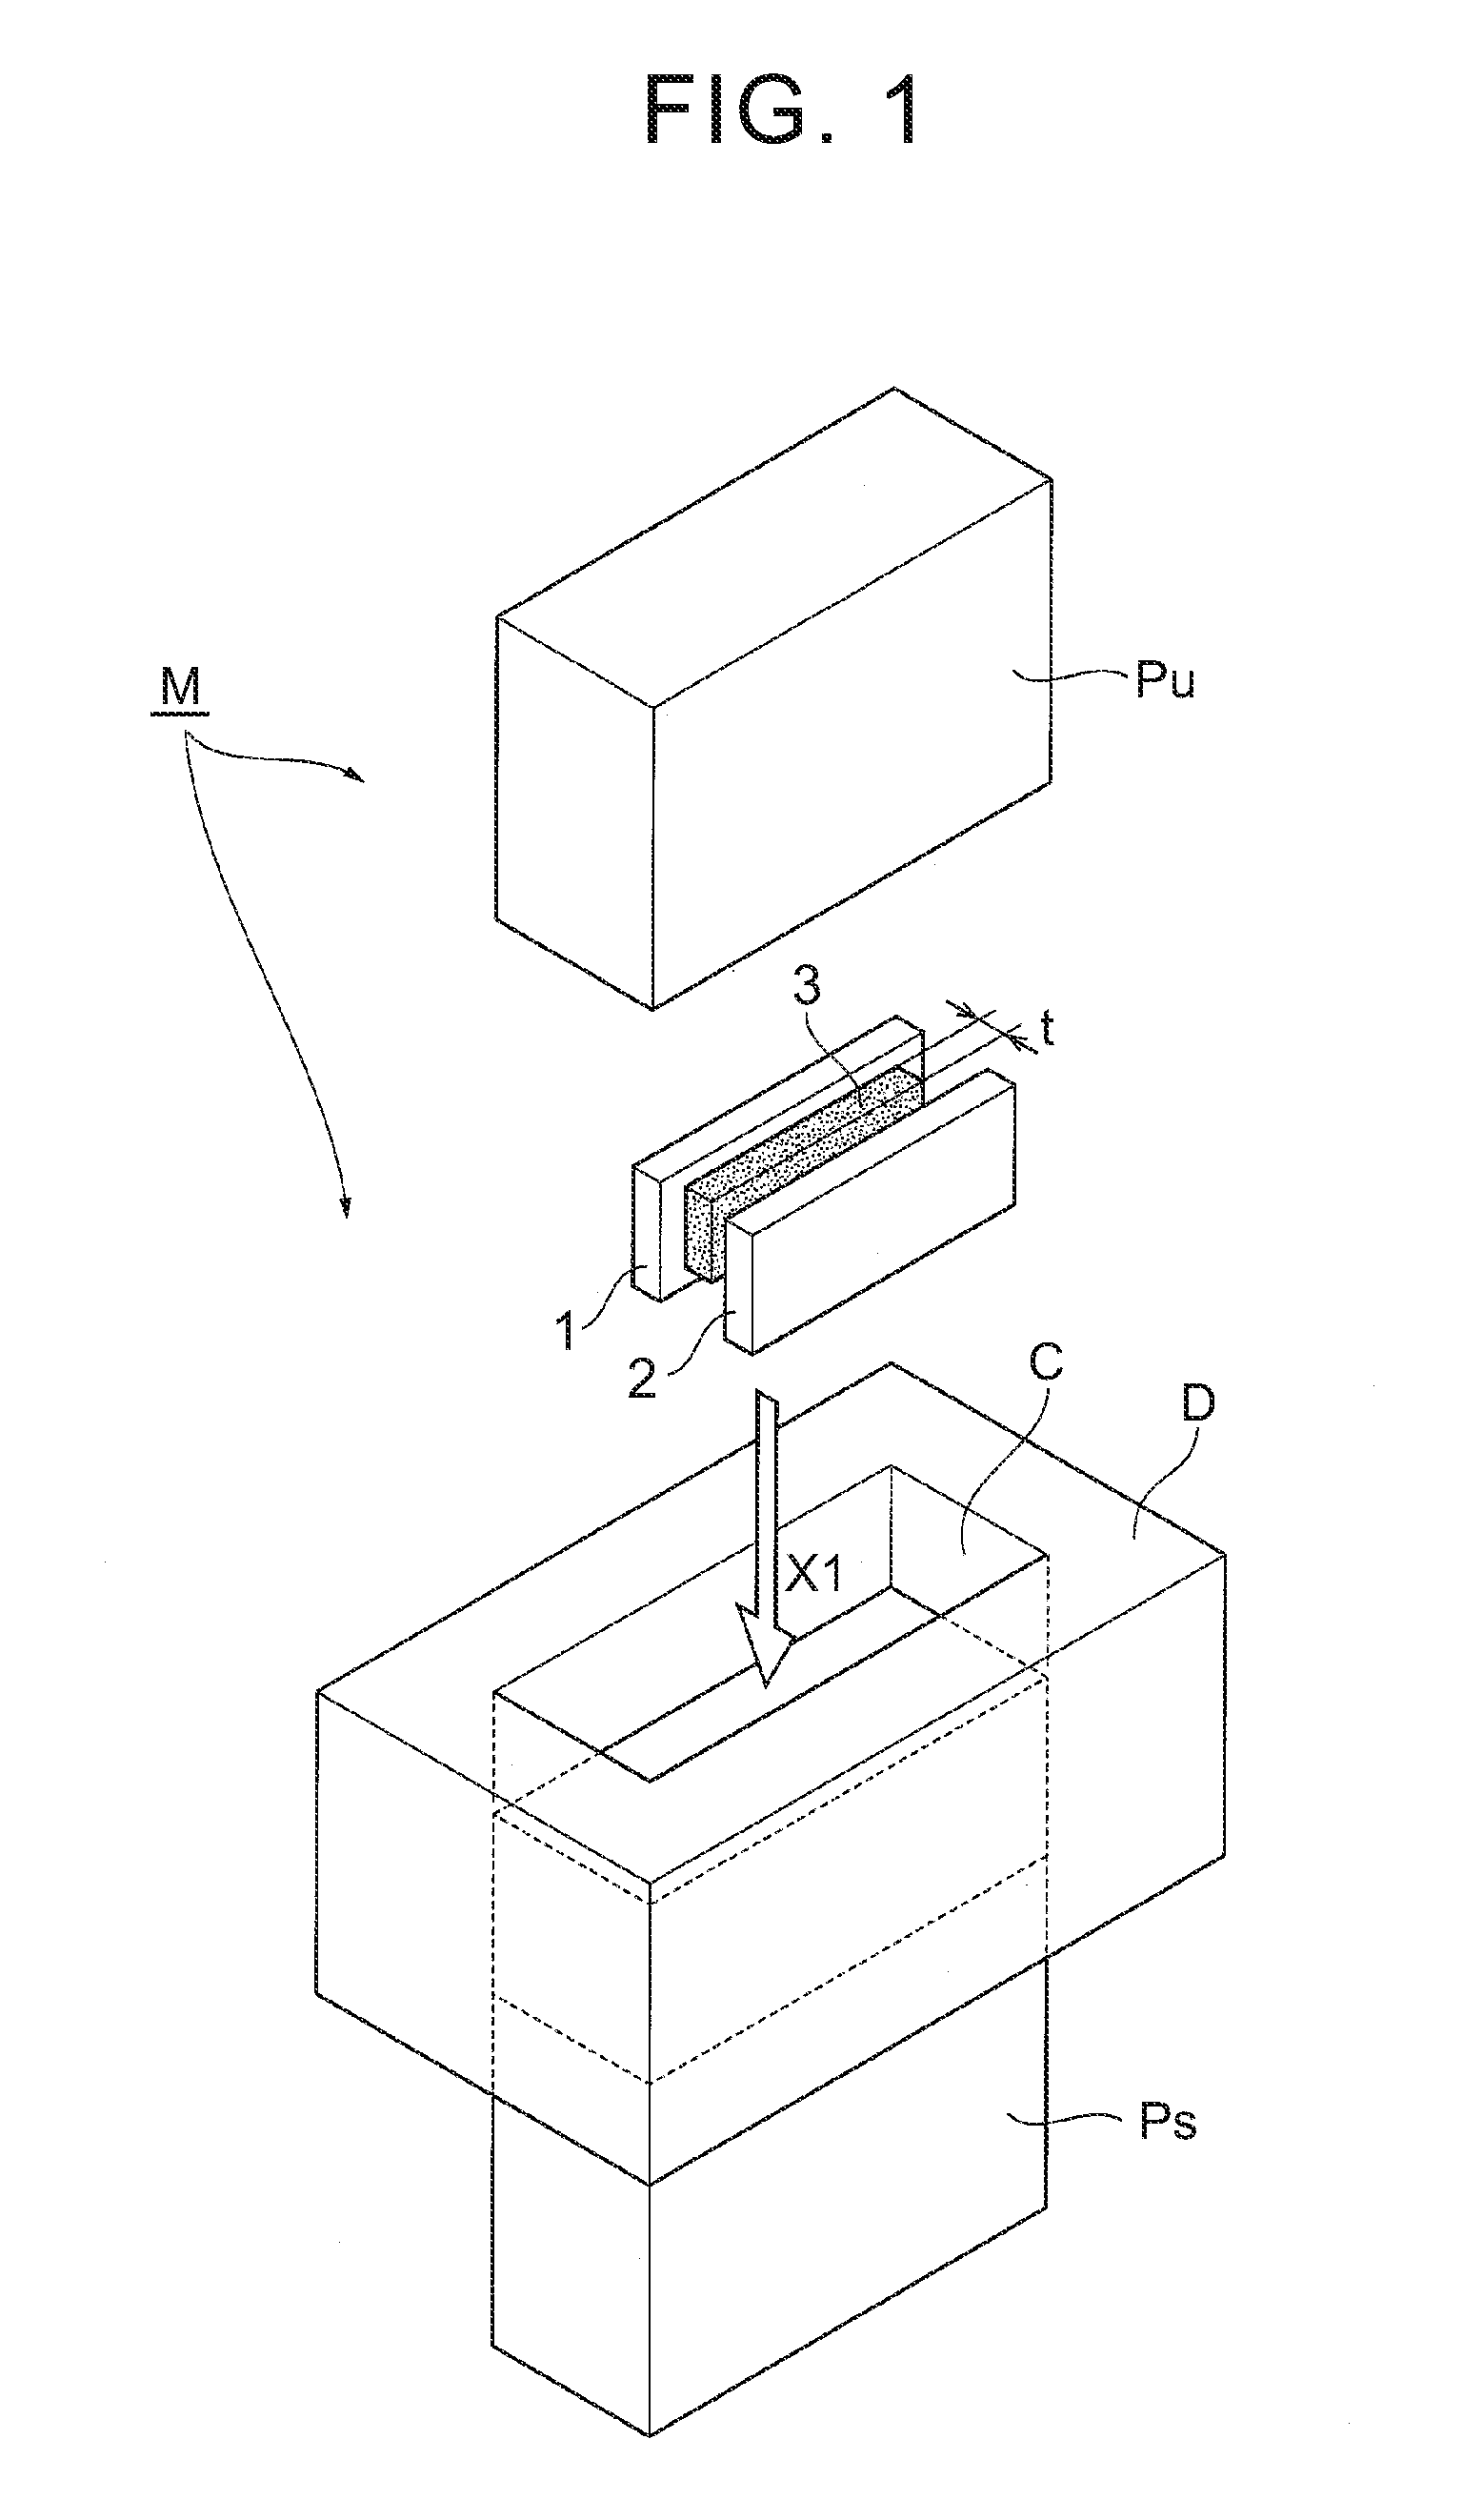 Rotor production method